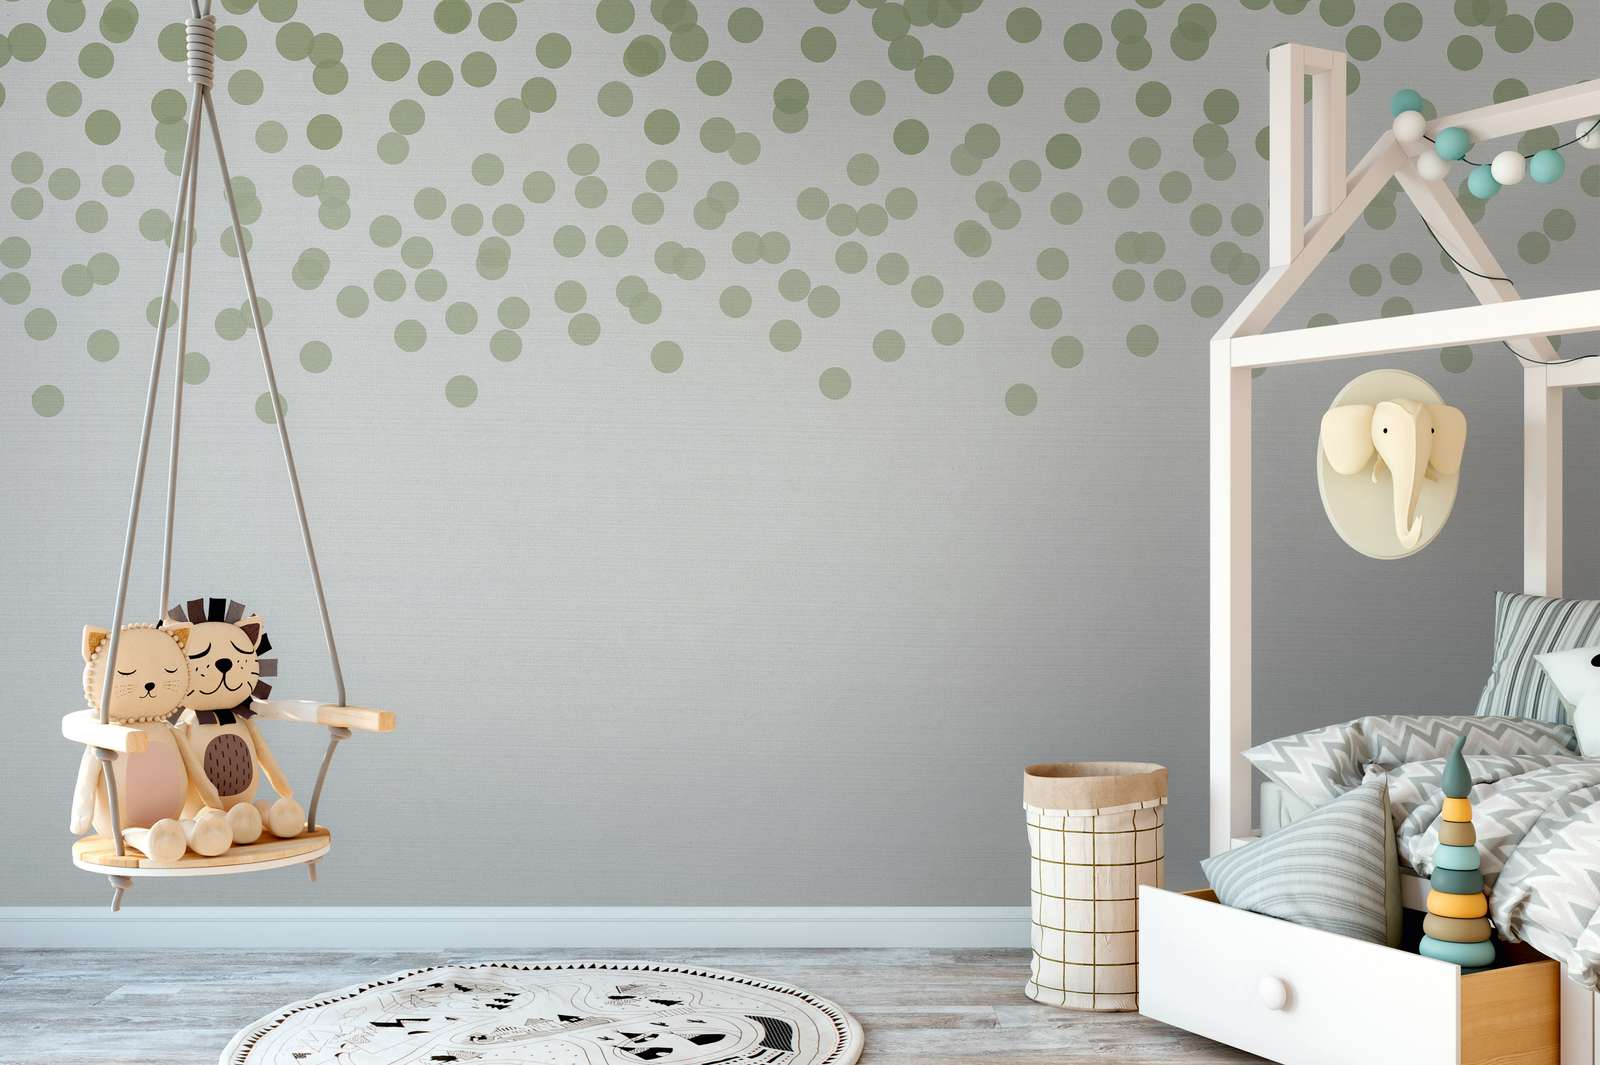             Photo wallpaper with discreet dot pattern - Green, Grey
        